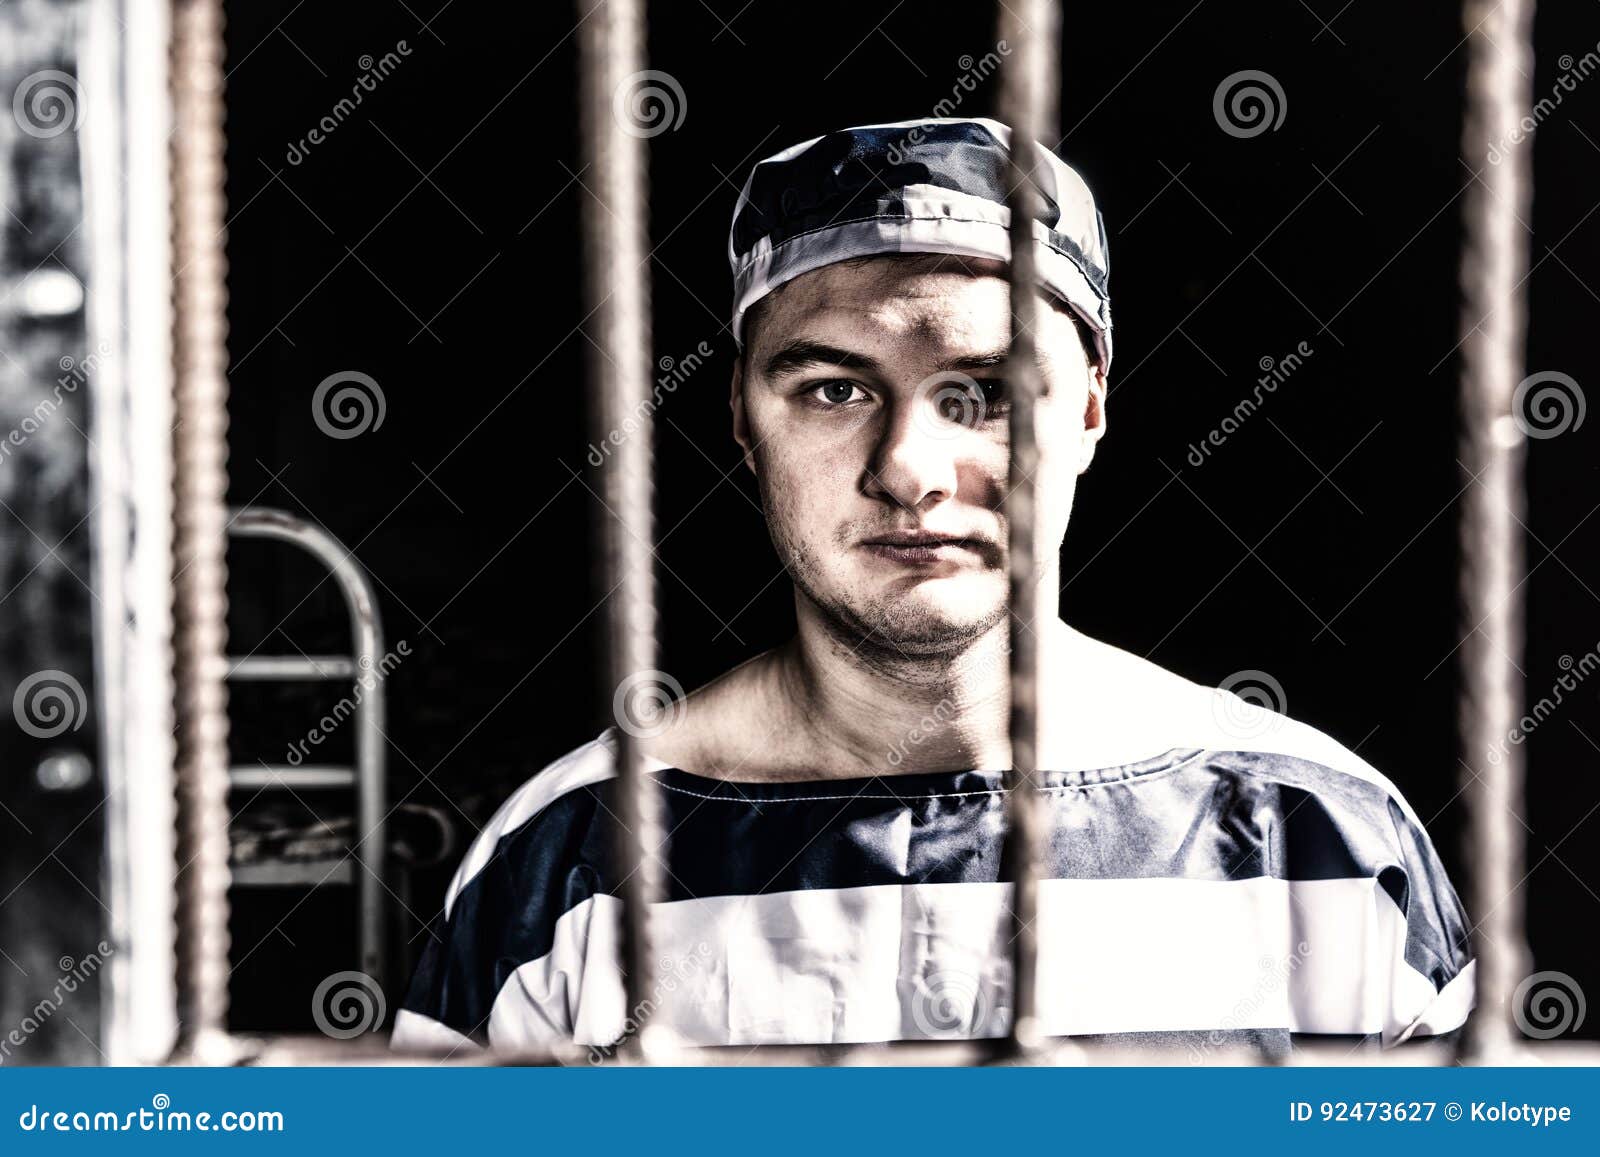 Portrait Of Male Prisoner Wearing Prison Uniform Standing Behind Stock Image